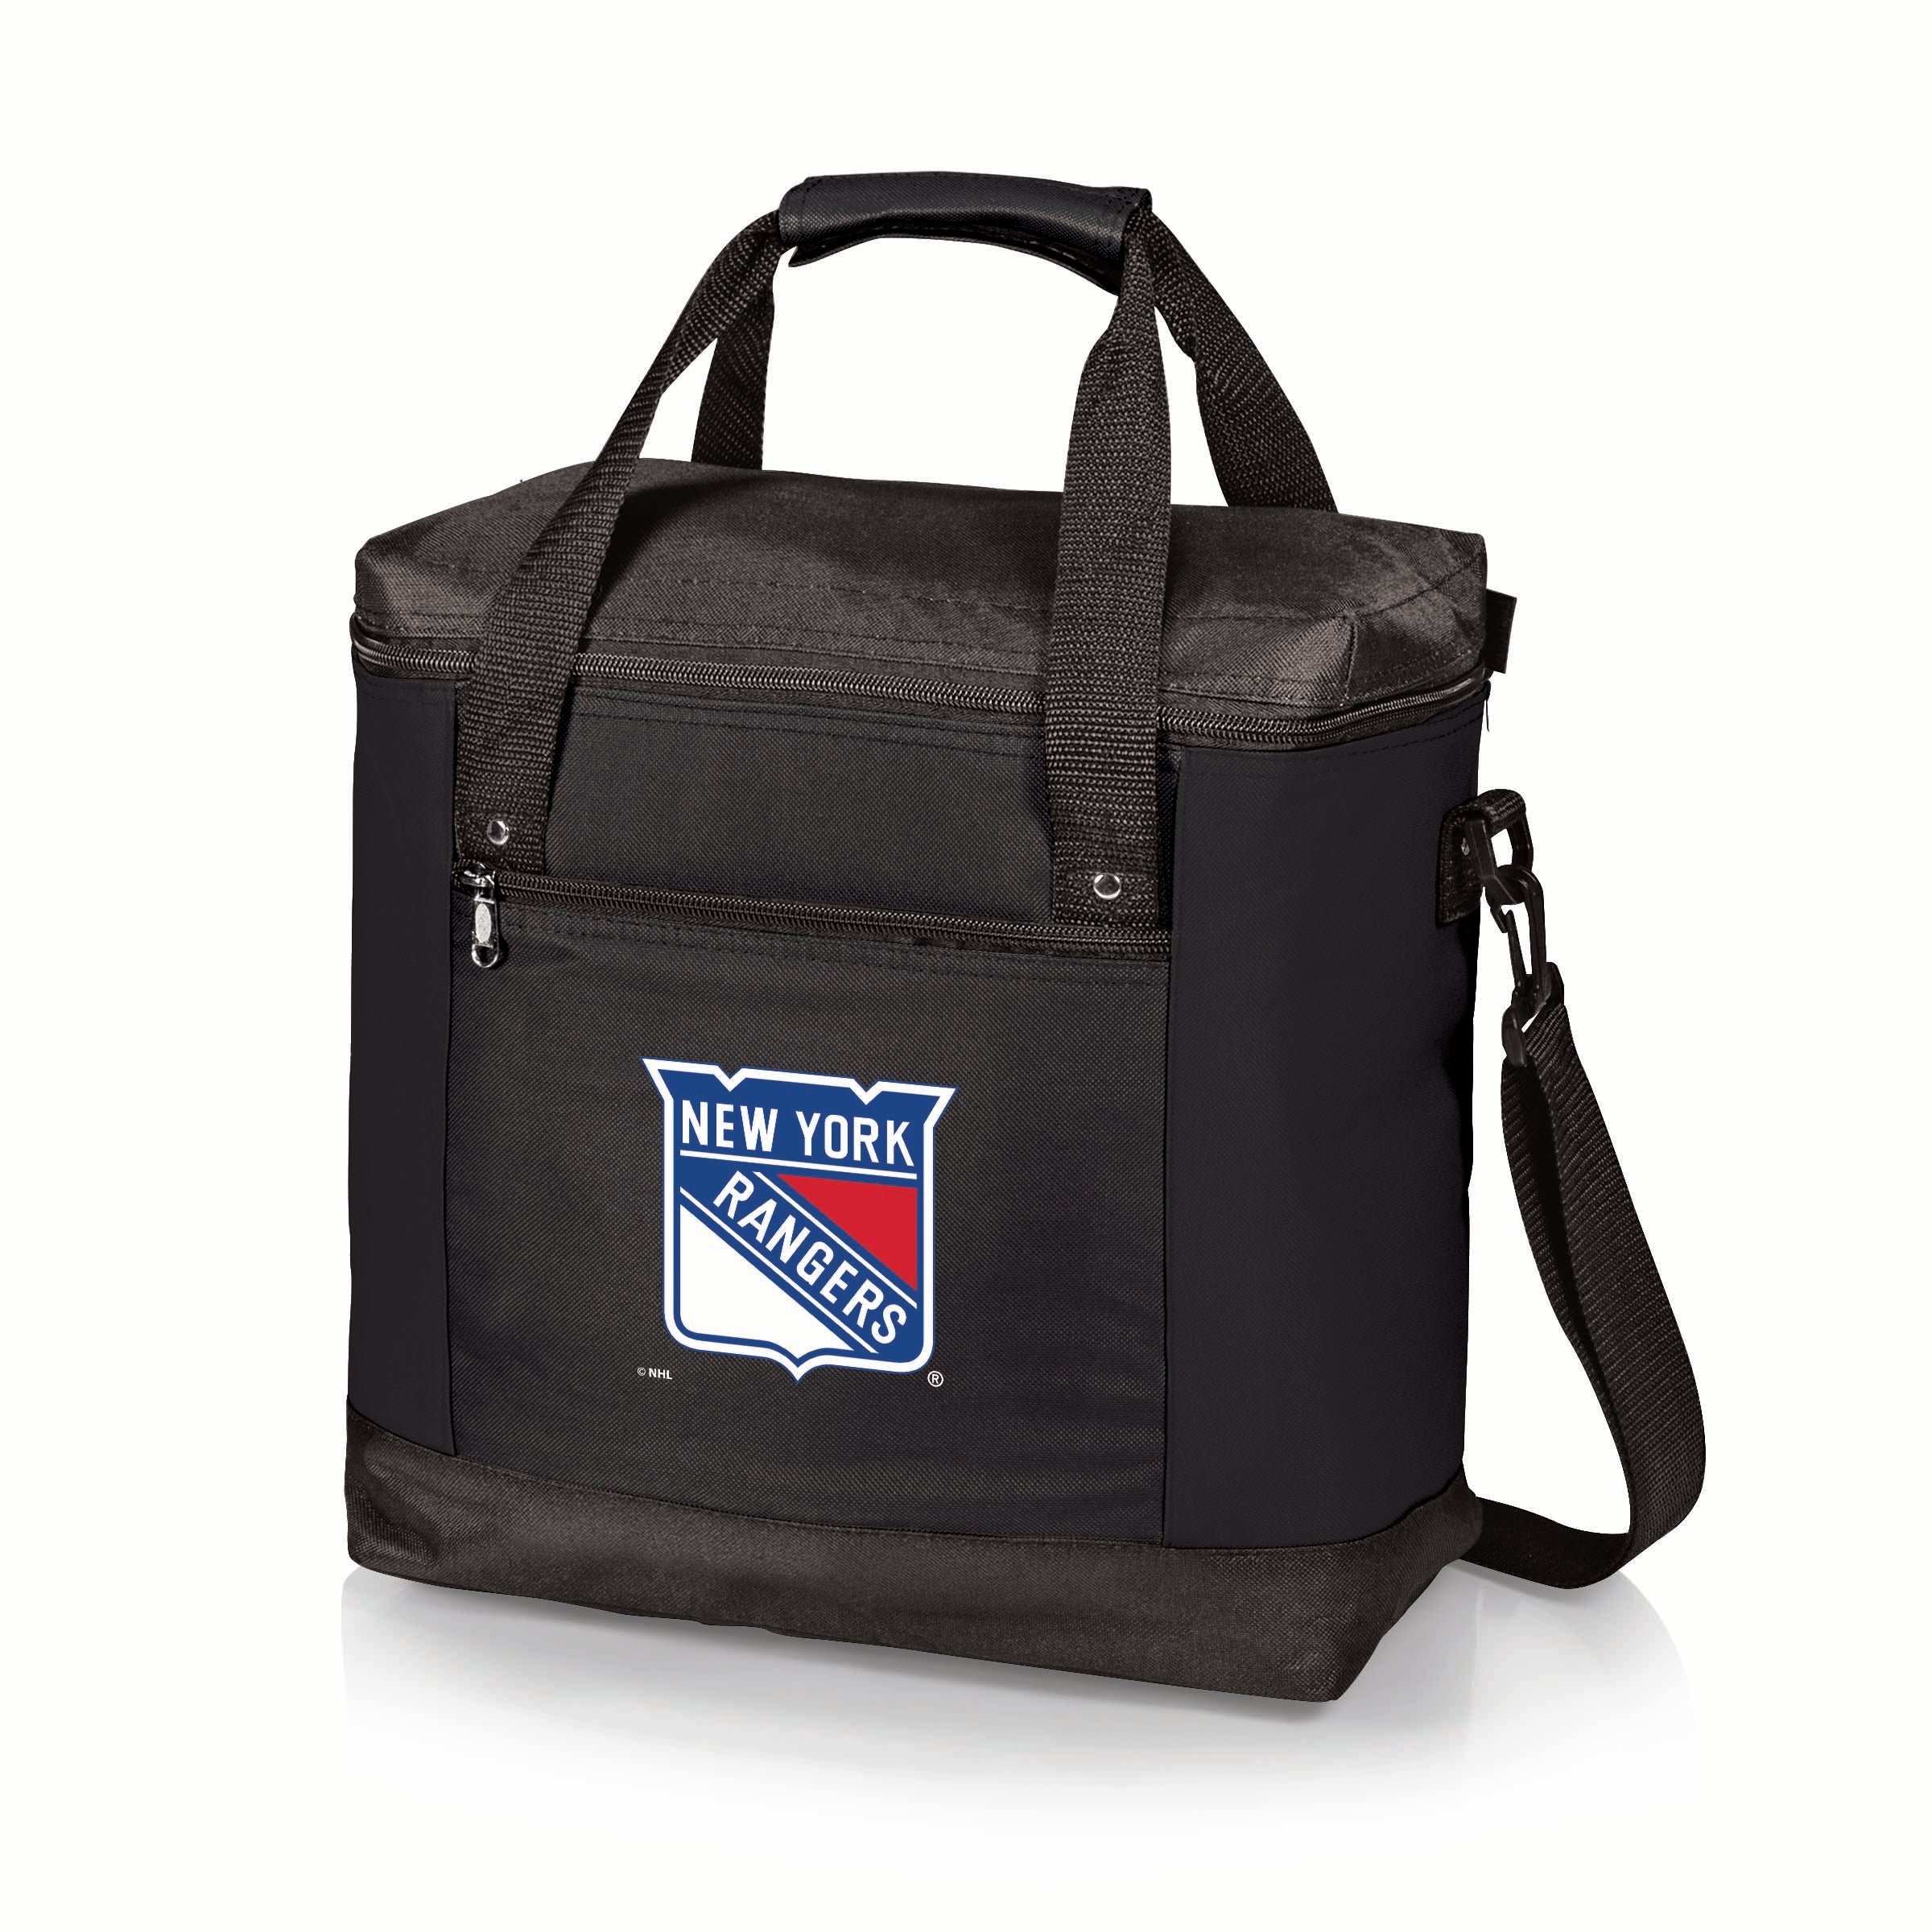 New York Rangers - Montero Cooler Tote Bag